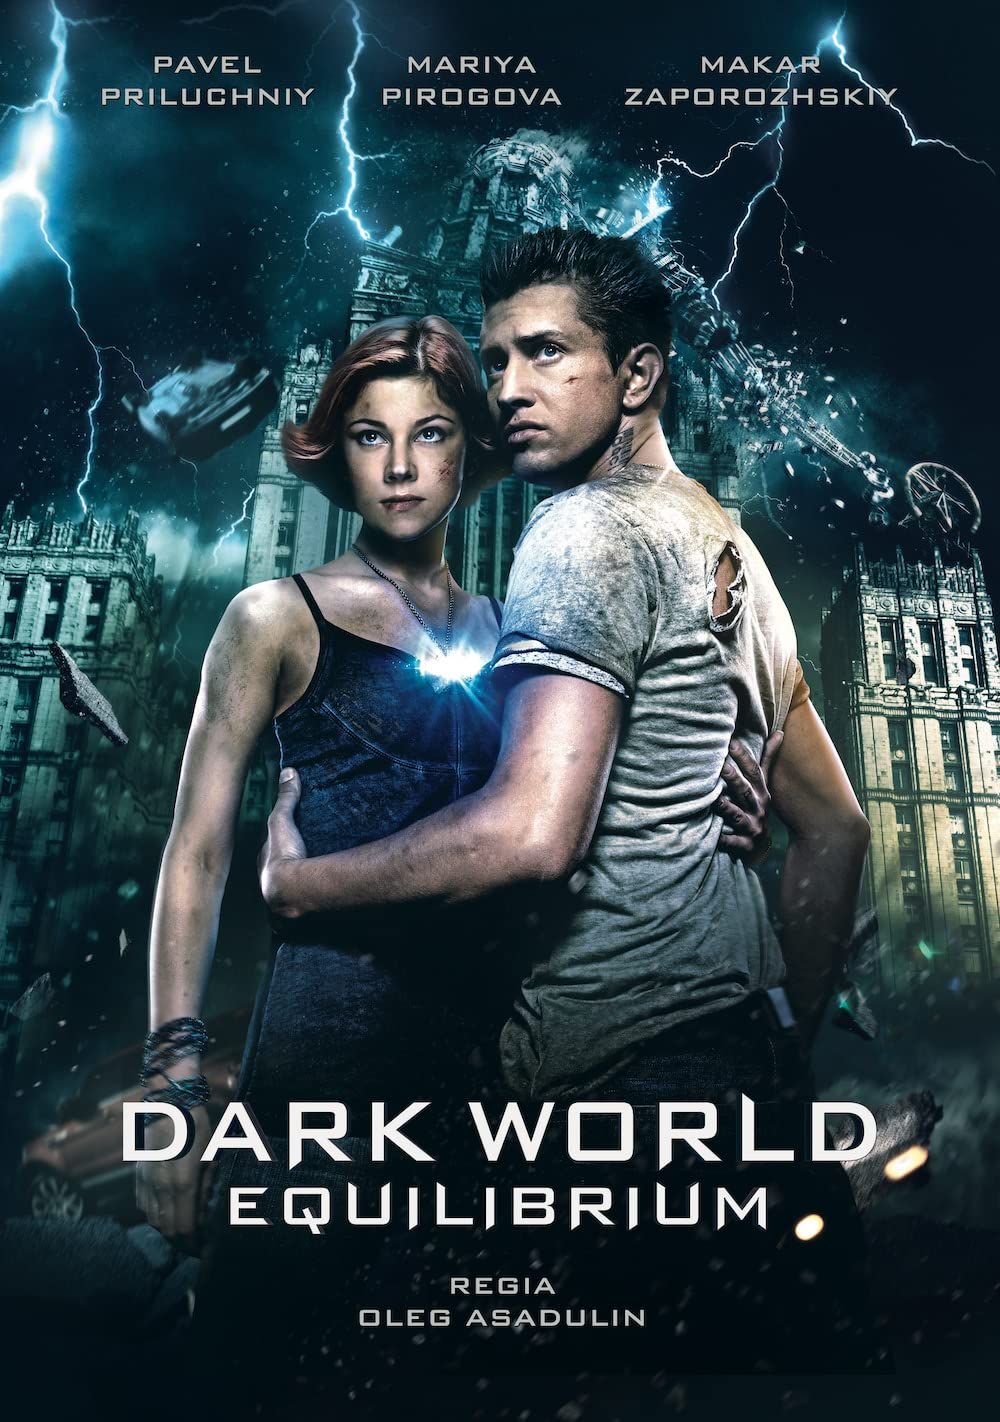 Dark World Equilibrium (2013) Hindi Dubbed BluRay download full movie